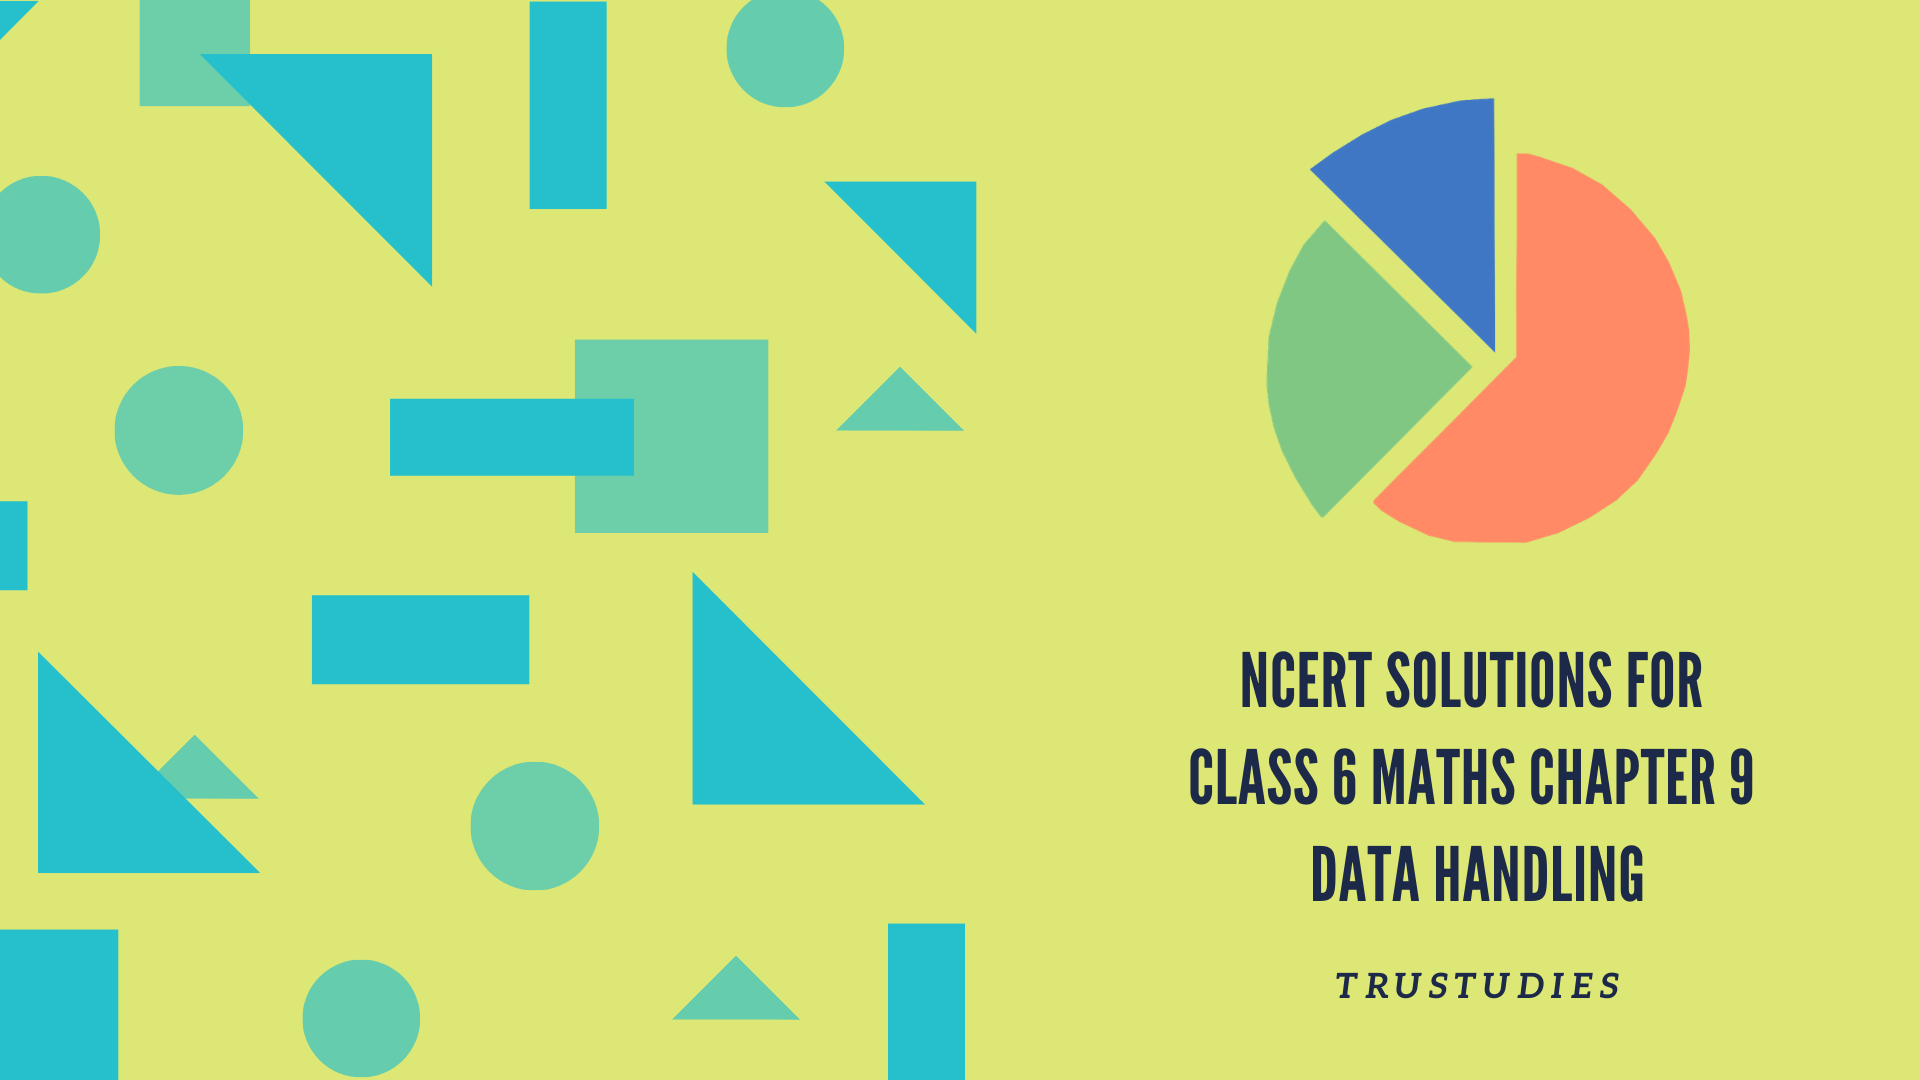 NCERT solutions for class 6 maths chapter 9 data handling banner image